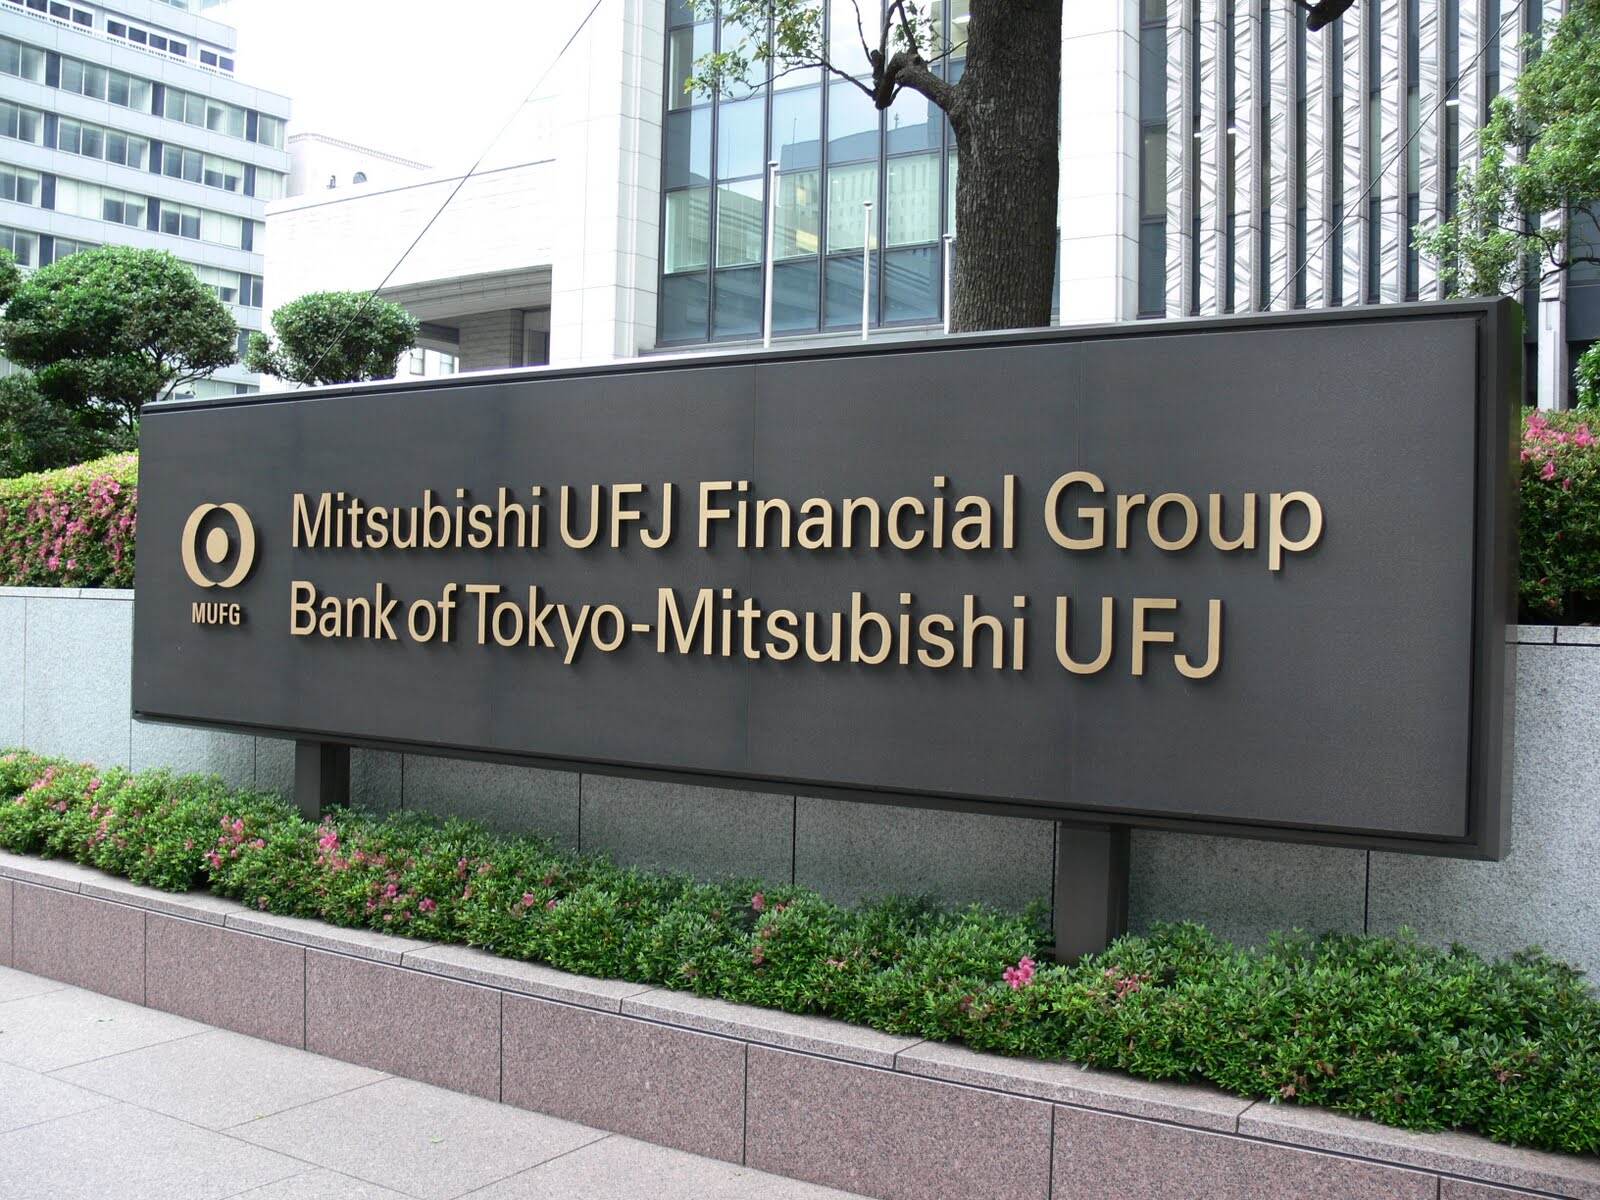 9-fascinating-facts-about-mitsubishi-ufj-financial-group-mufg